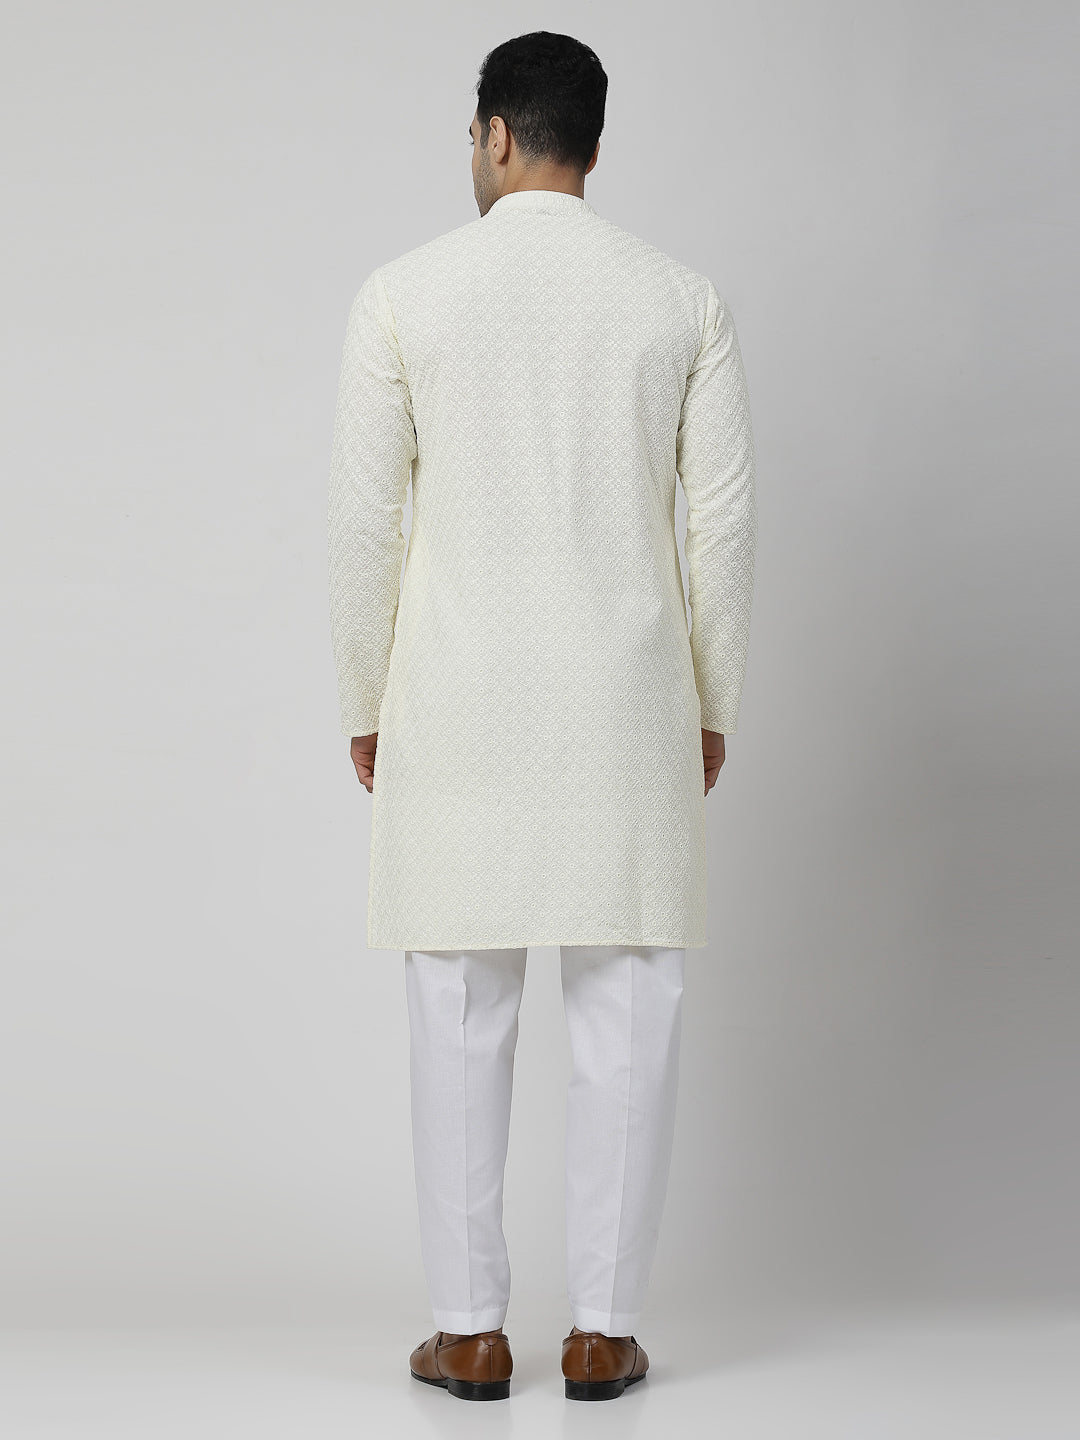 Men's Embroidery Cotton Blend Chikankari Kurta Set with White Pyjama (Off White Color)